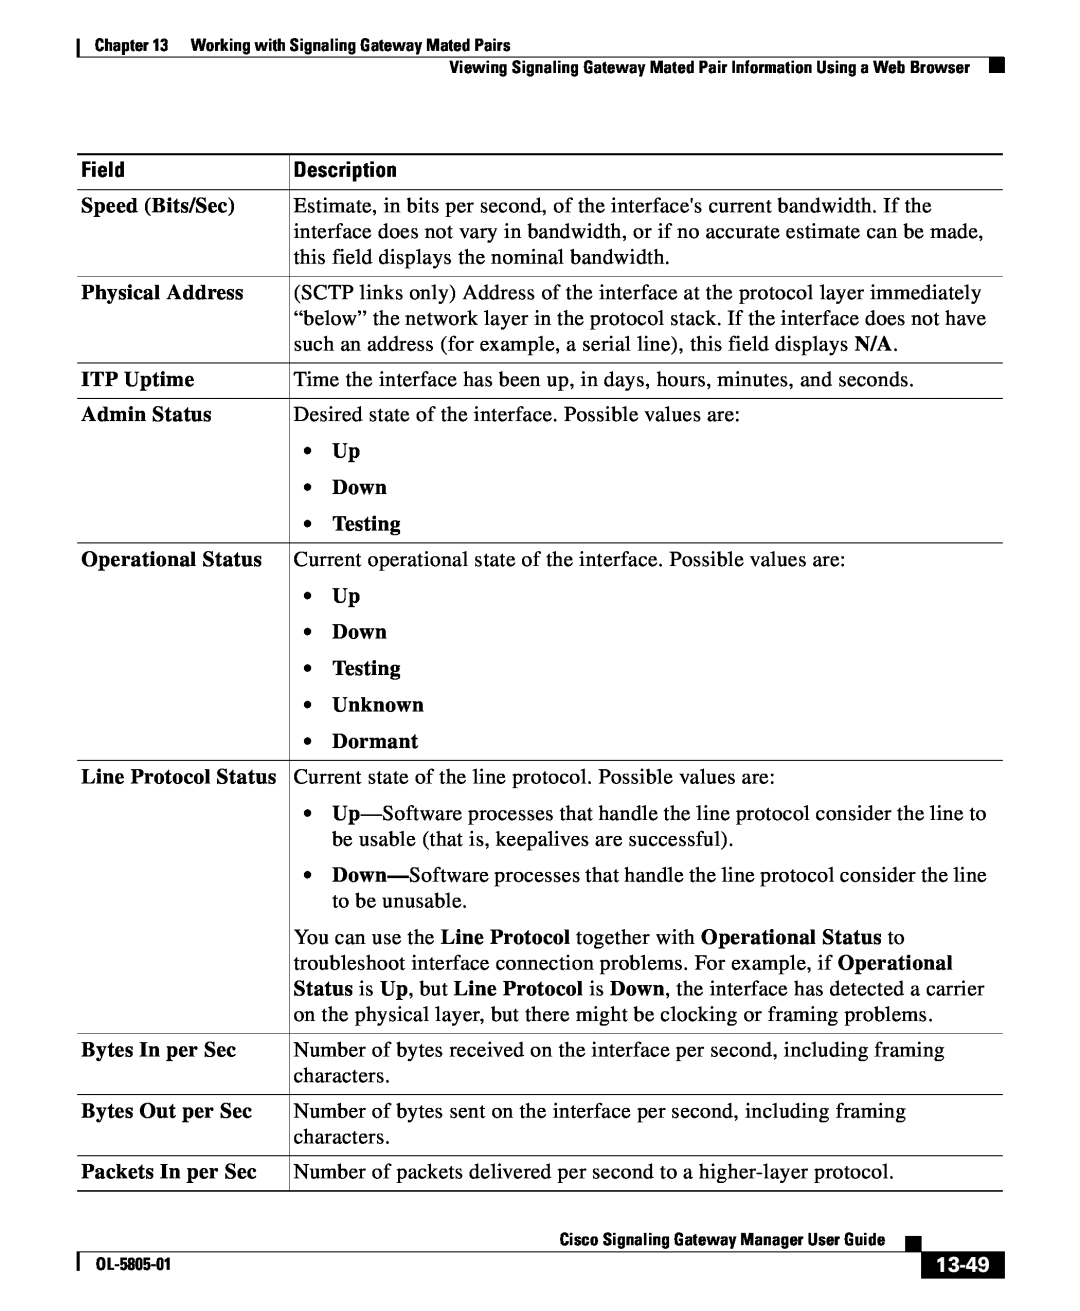 Cisco Systems OL-5805-01 manual 13-49, Field, Description 